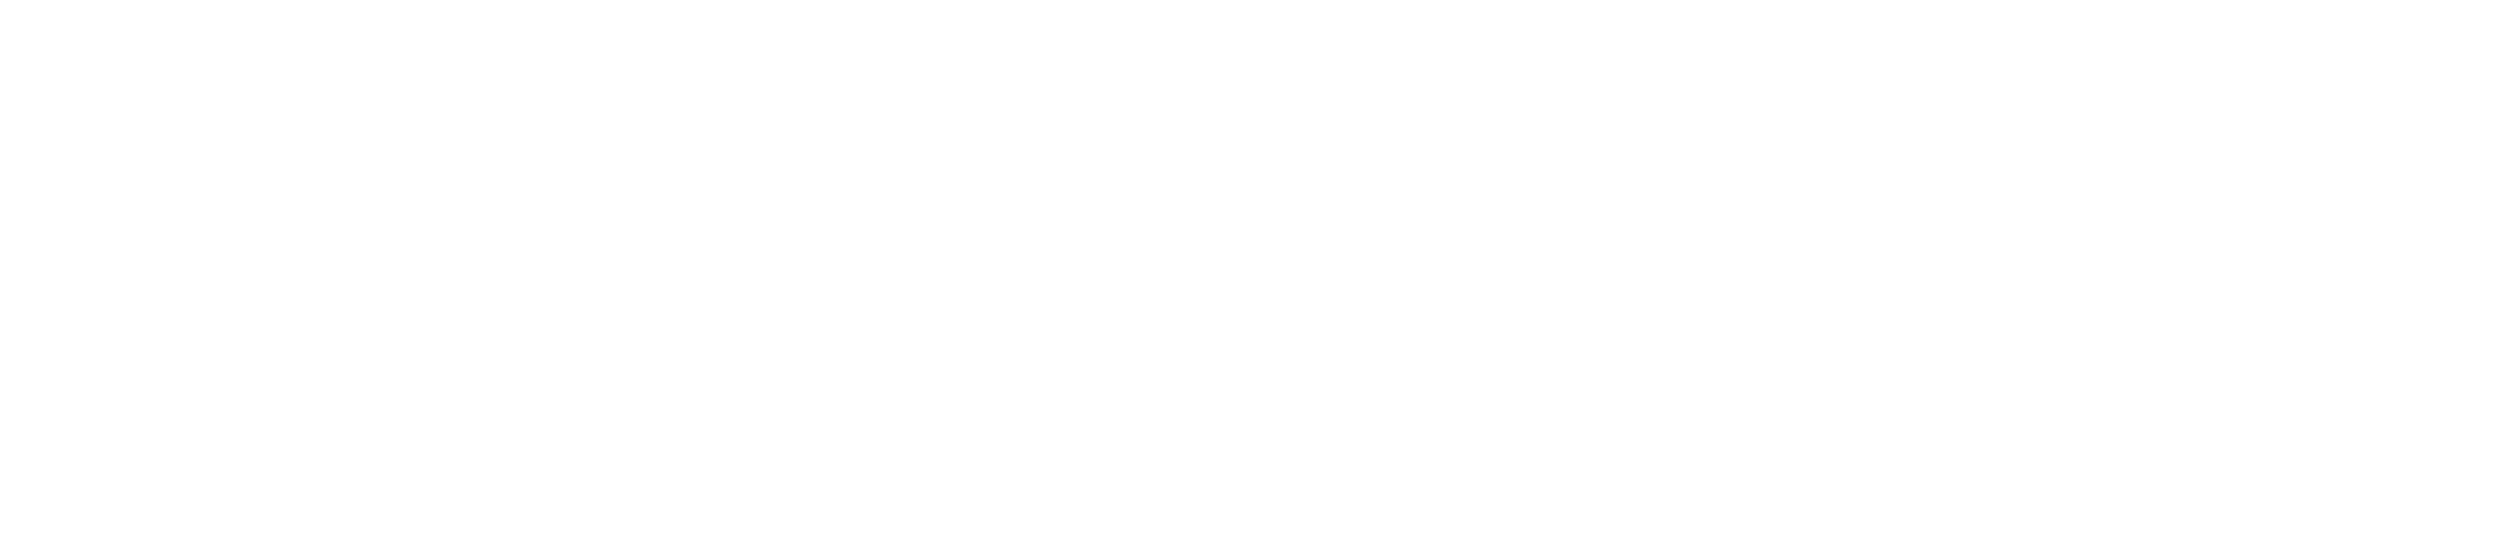 Gulf House Engineering